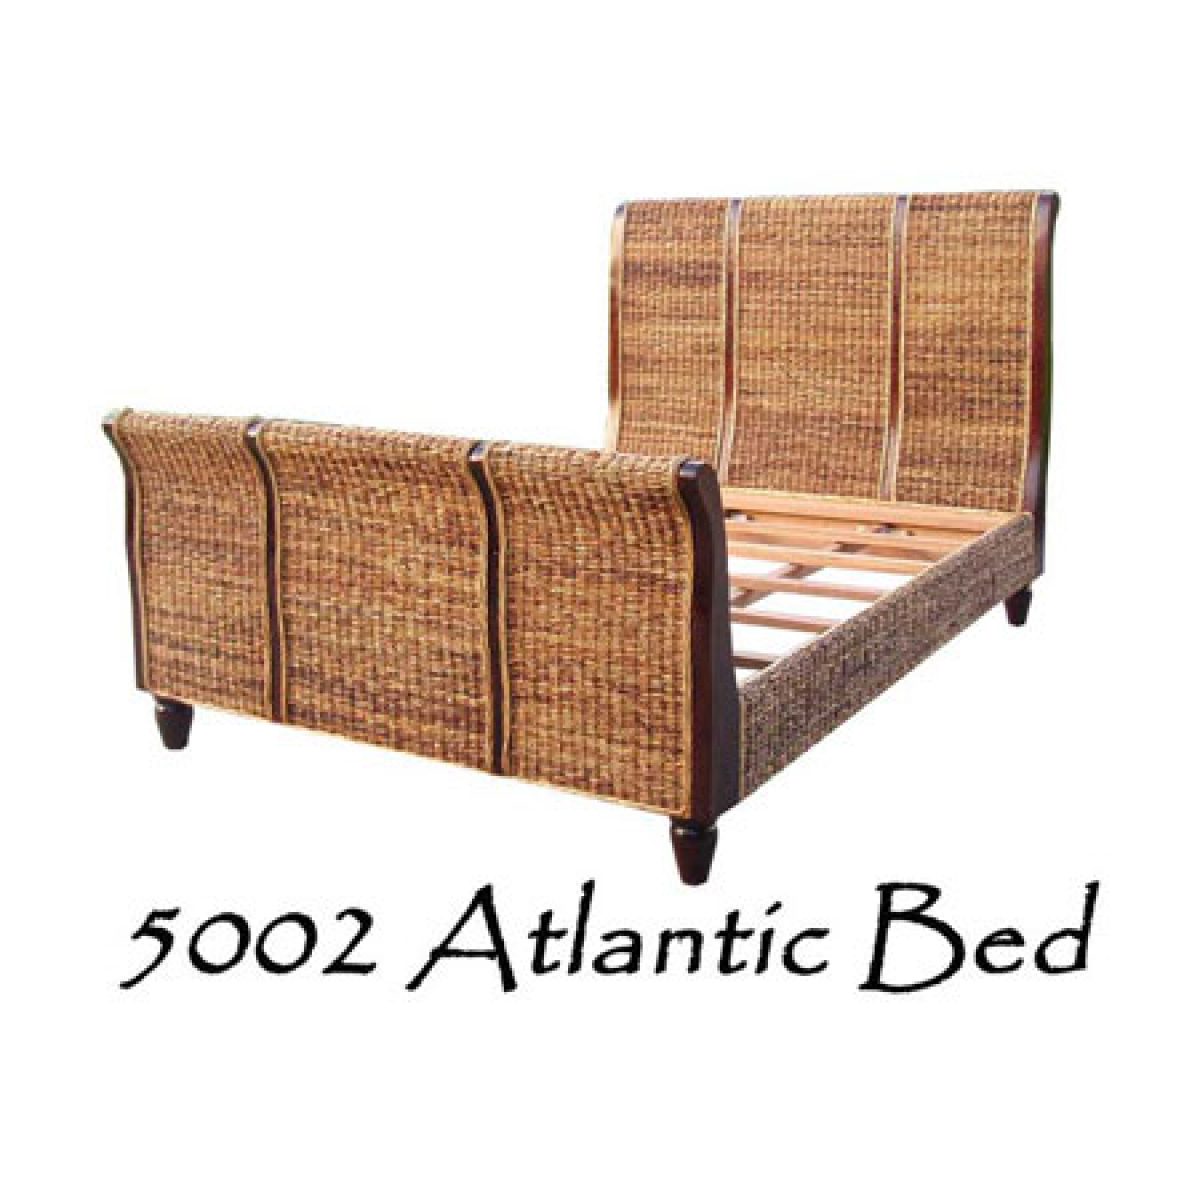 Atlantic Rattan Bed Indonesia Rattan Furniture Wicker Furniture